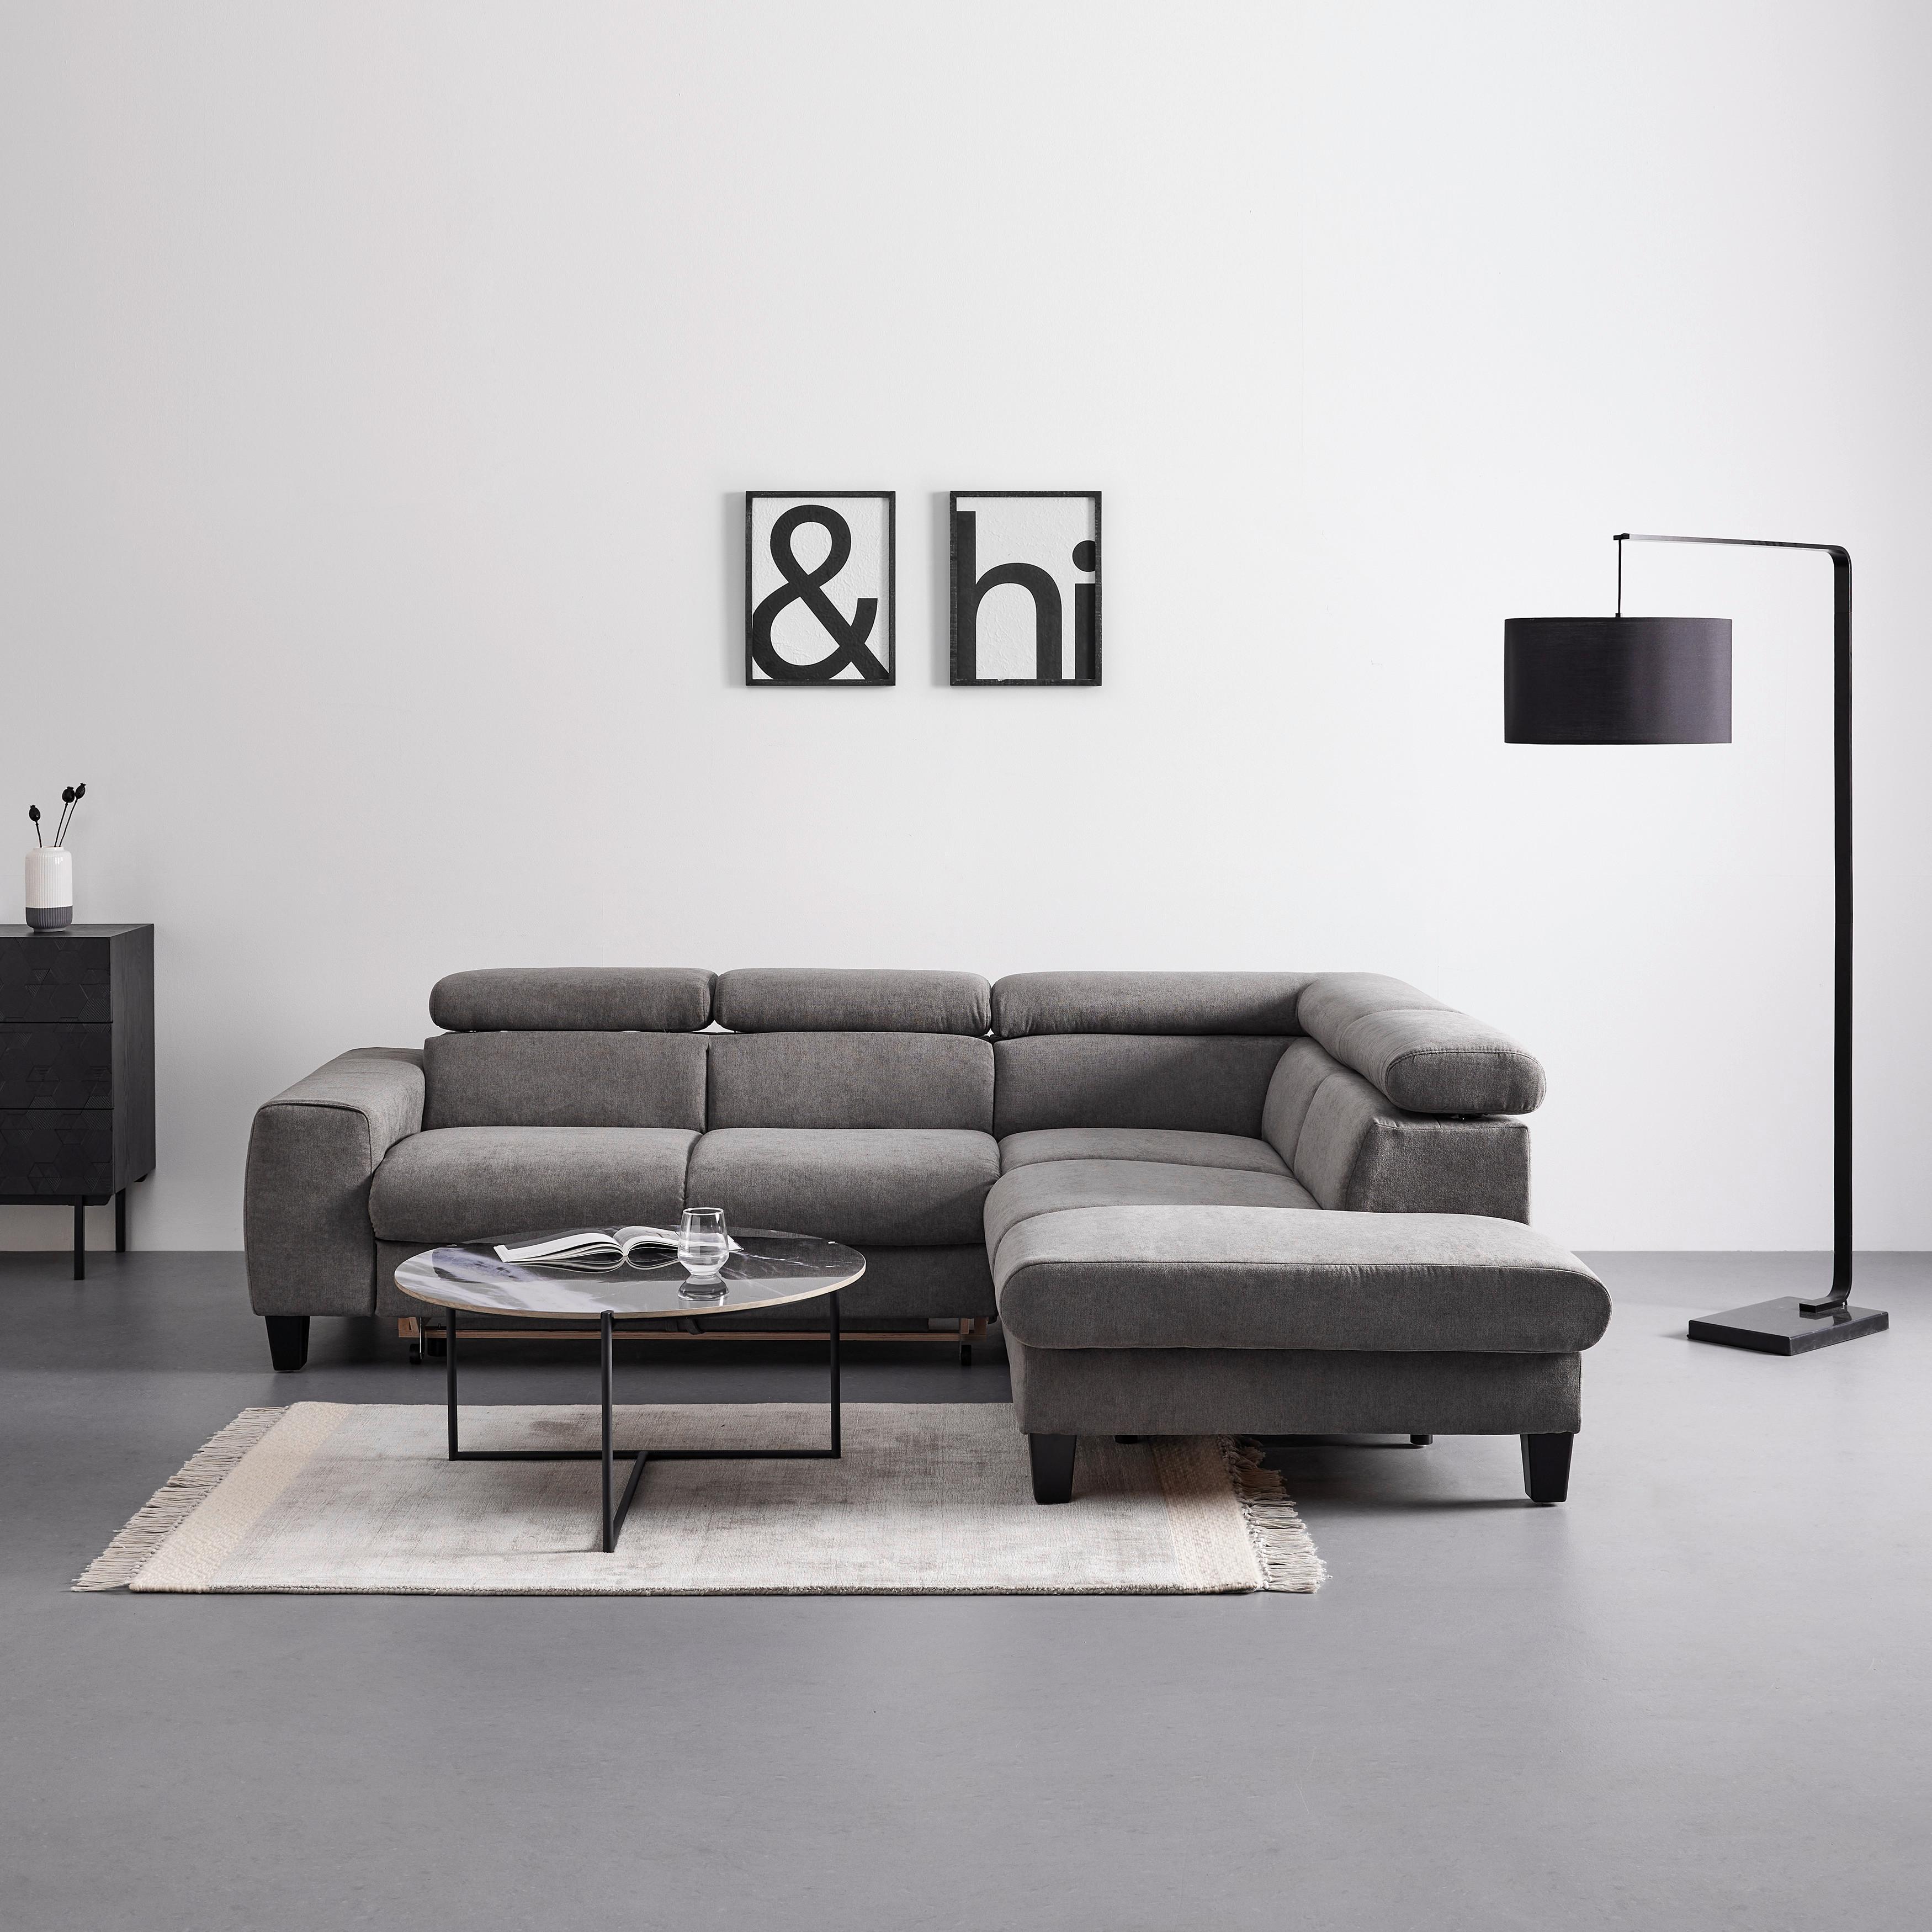 Sedežna Garnitura Malibu - temno siva, Moderno, tekstil/les (249/72/207cm) - Bessagi Home